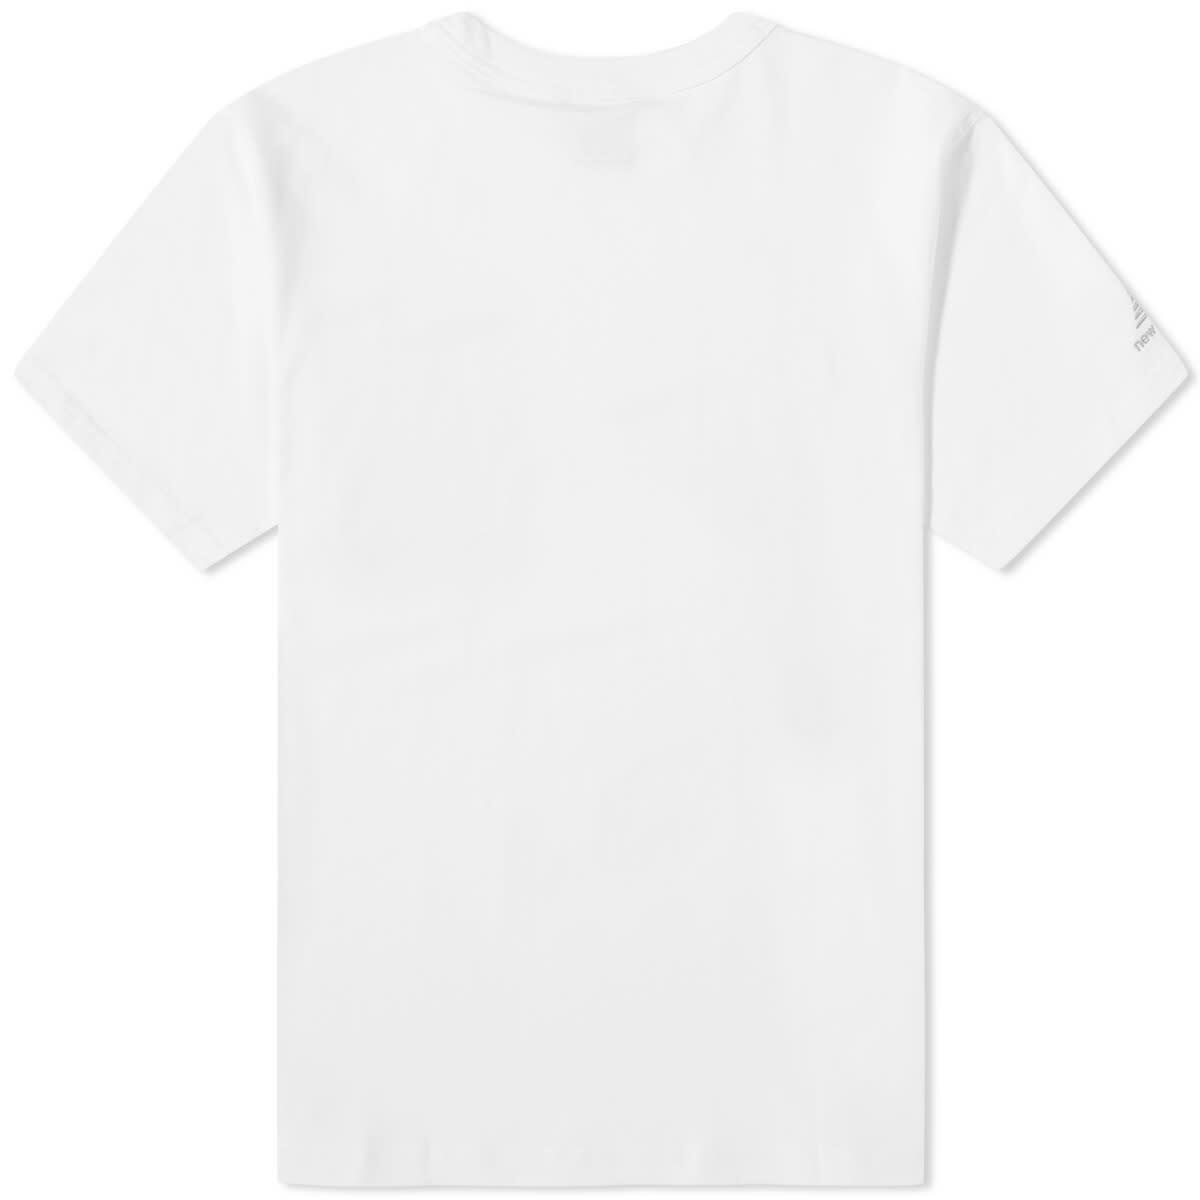 White Paul x Balance New Balance in T-Shirt Rich New